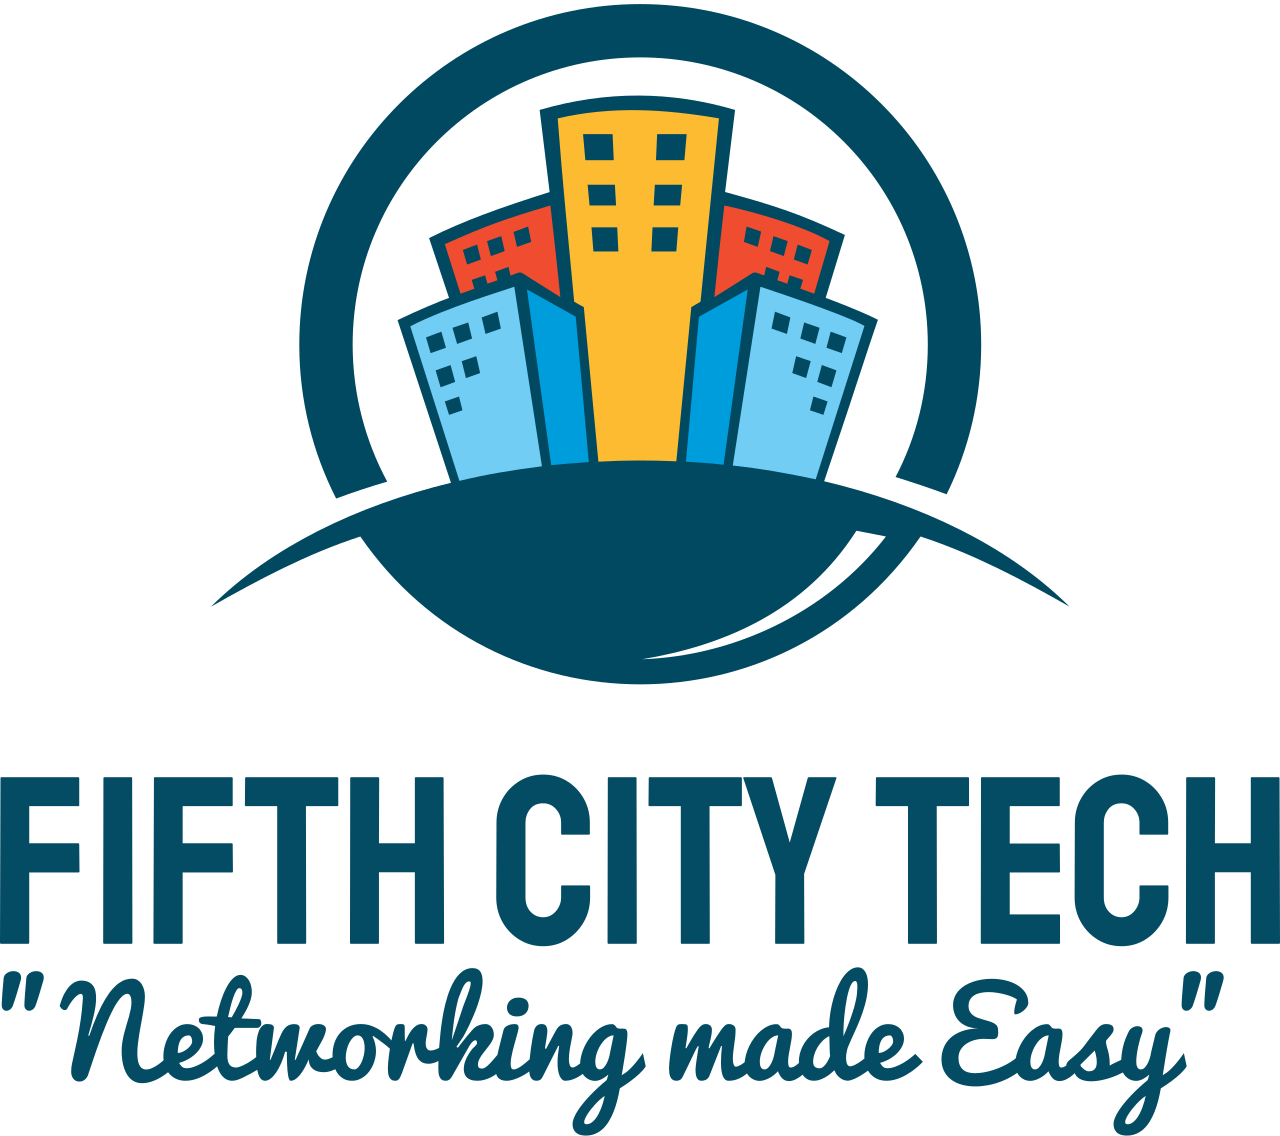 Fifth City Tech Logo